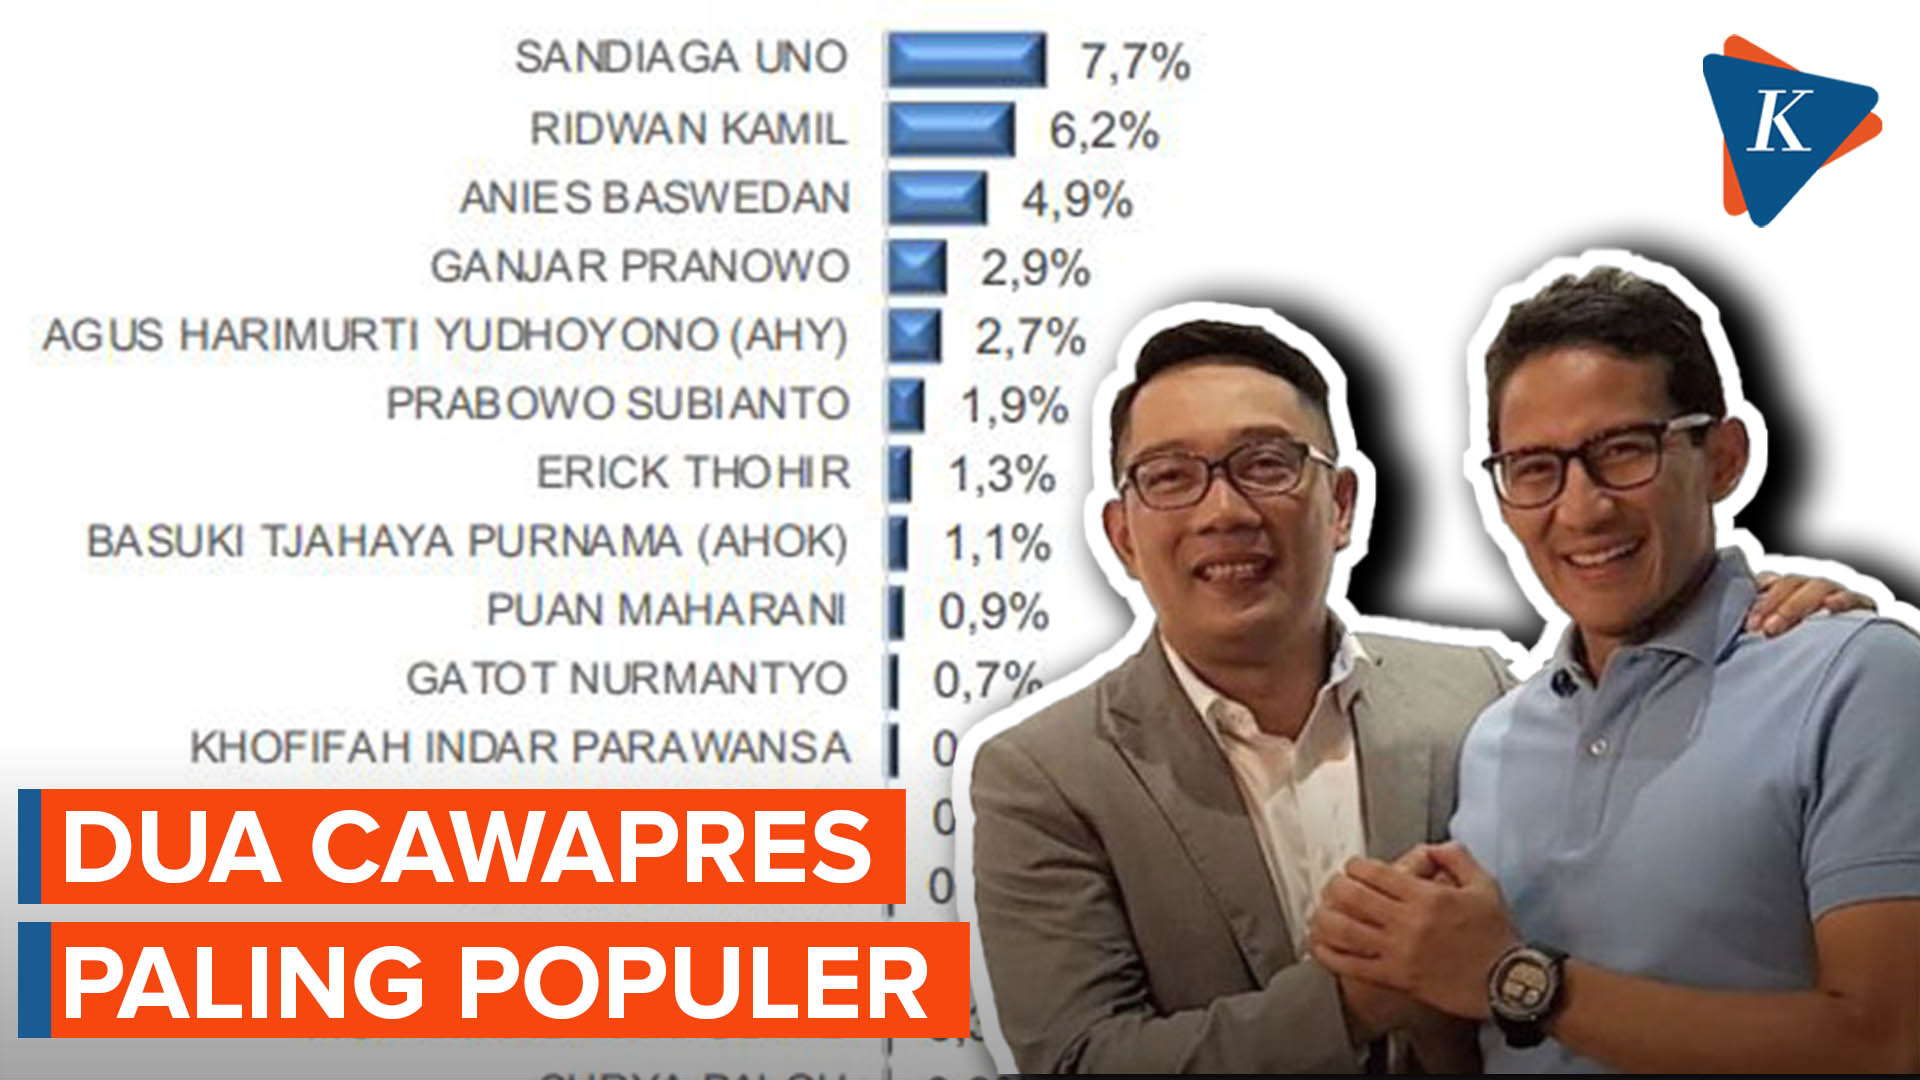 Survei CiGMark: Sandiaga dan Ridwan Kamil Cawapres Paling Populer